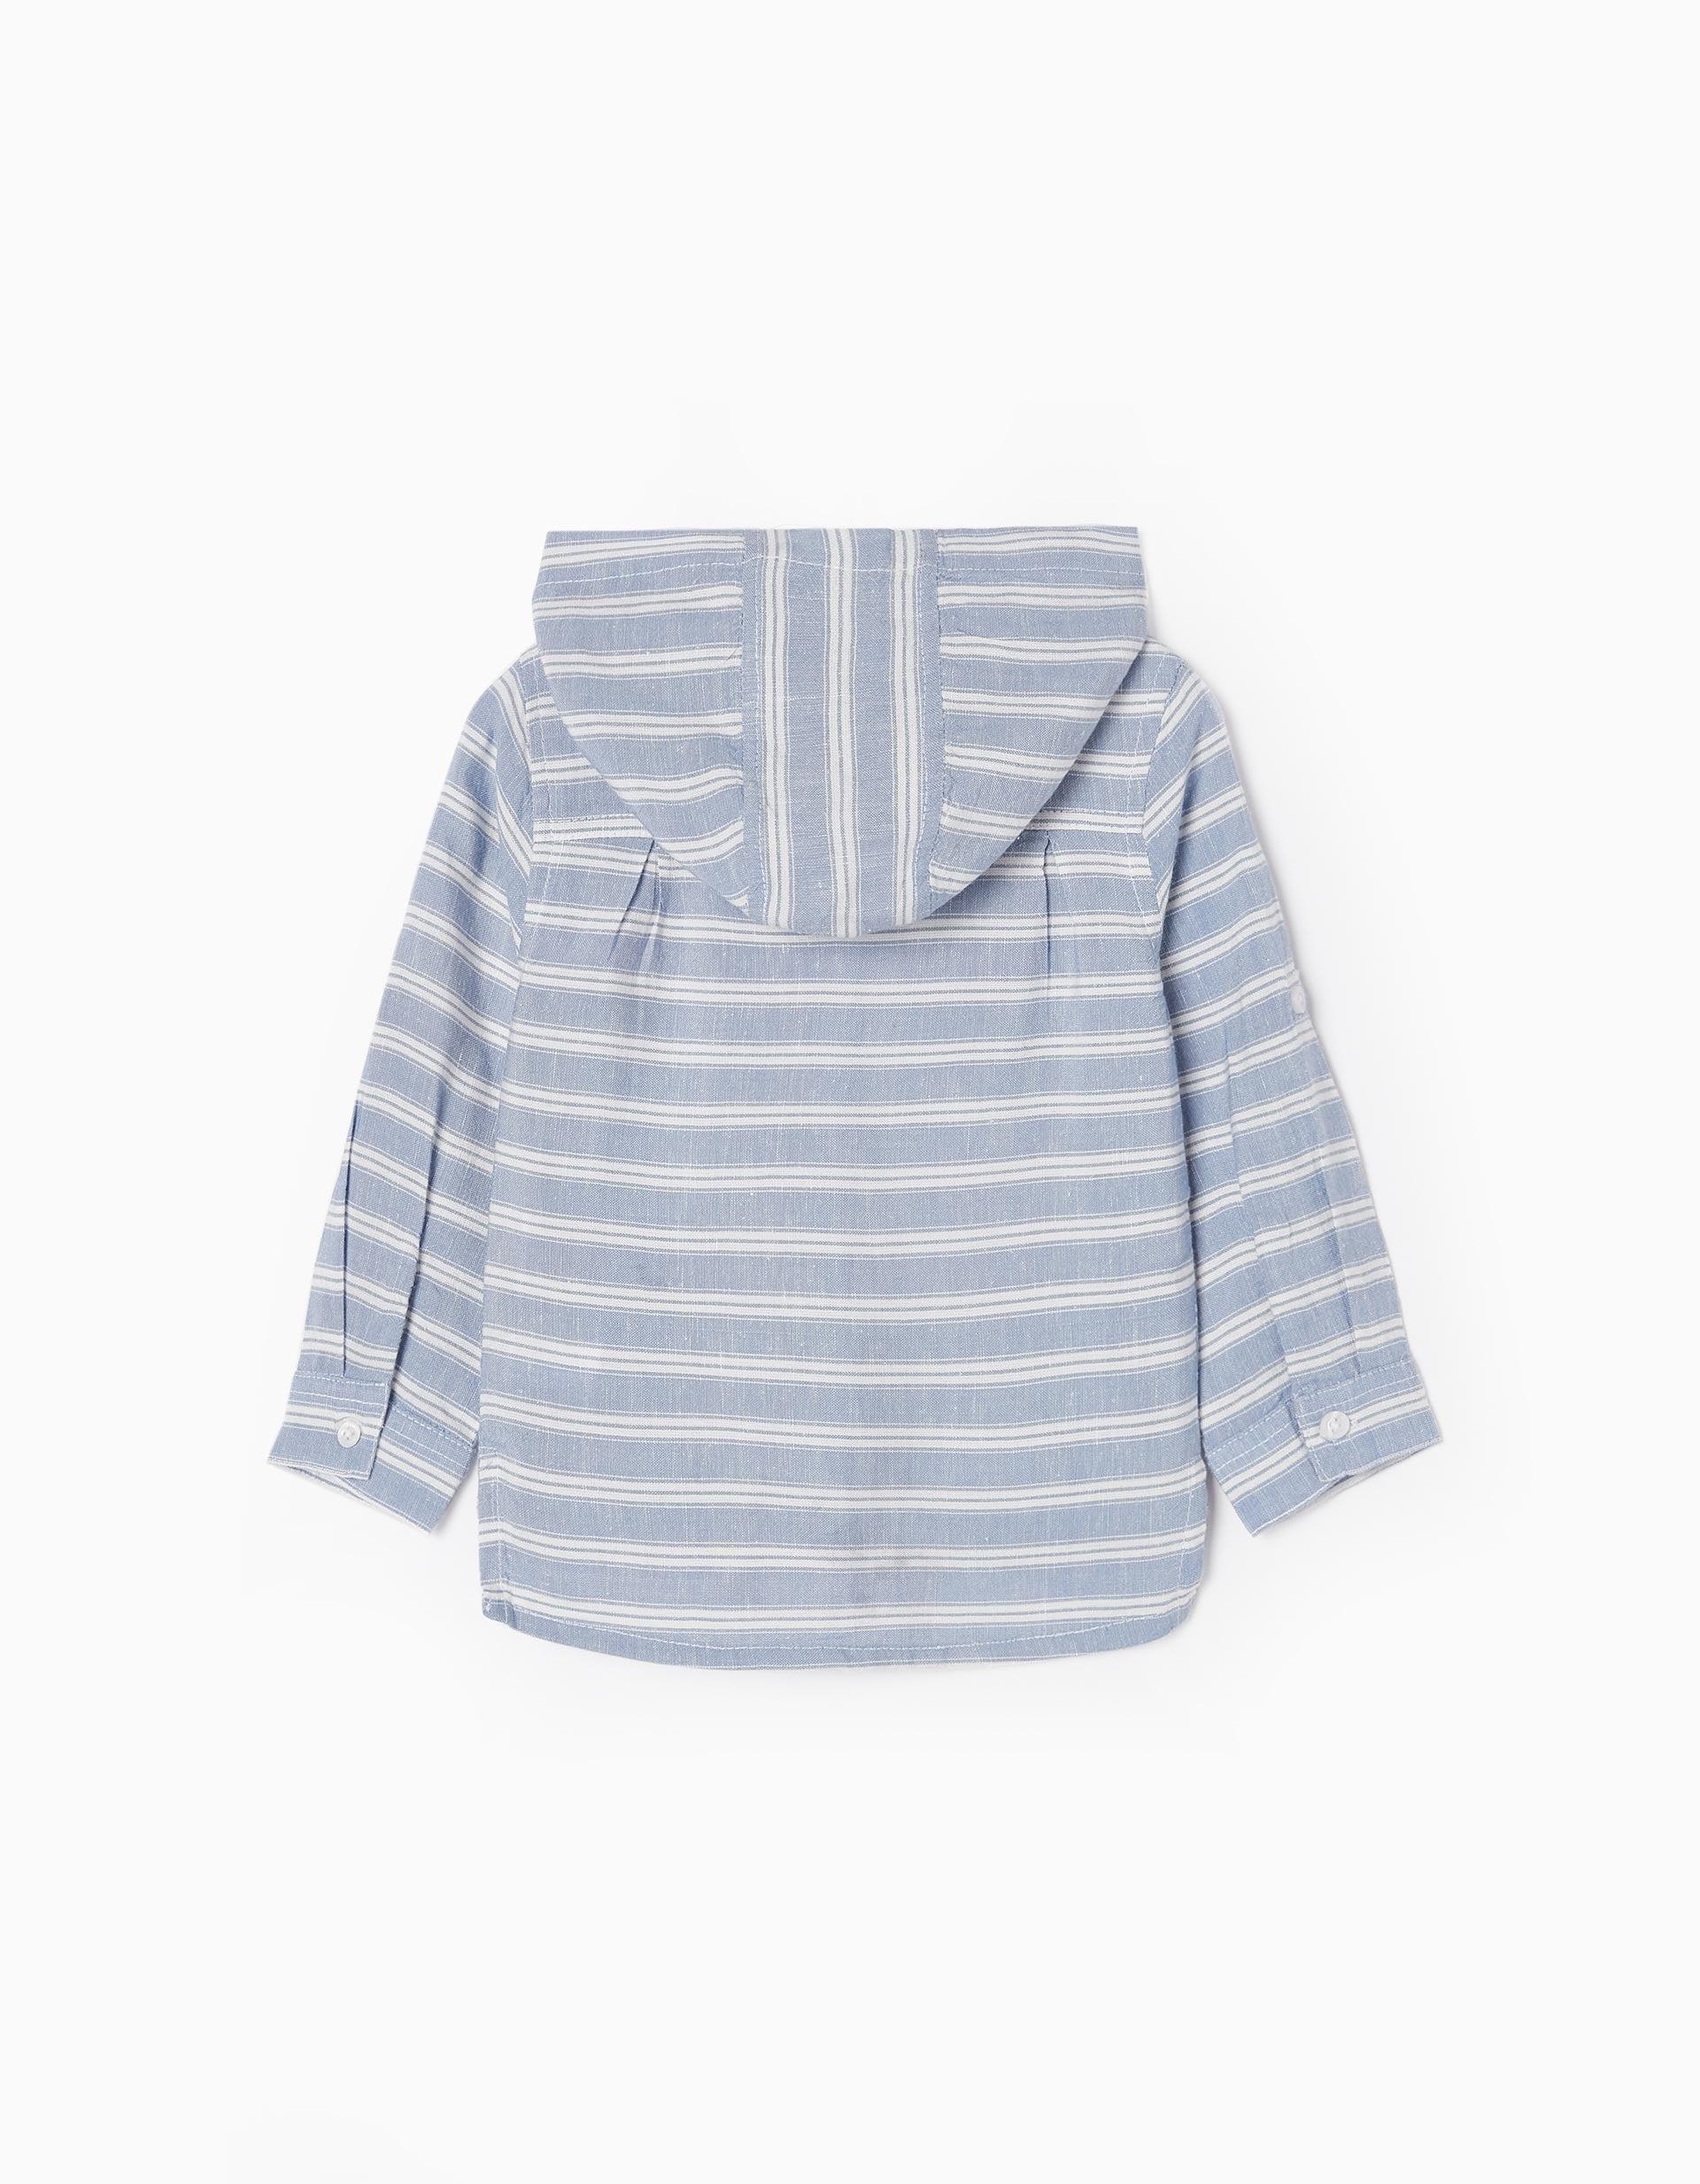 Zippy - Blue Hooded Striped Shirt, Baby Boys